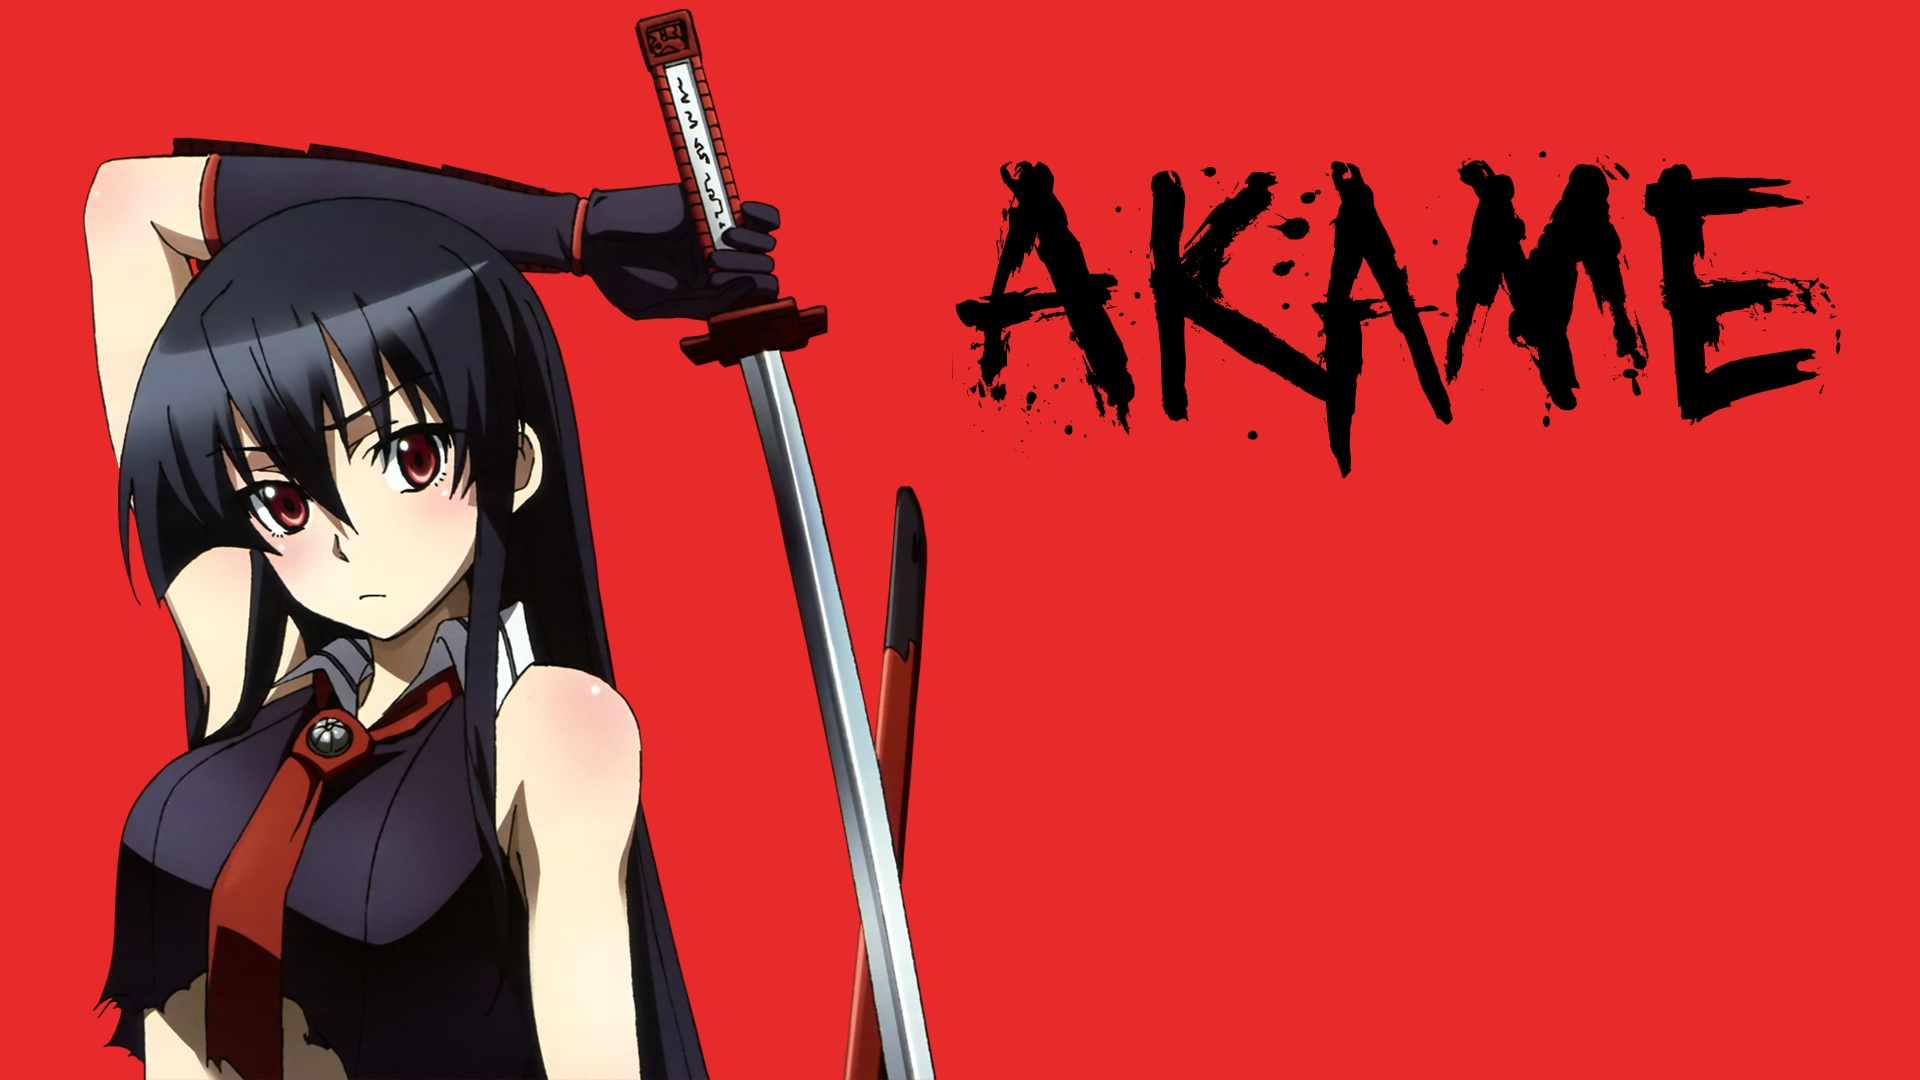 Akame Ga Kill best background